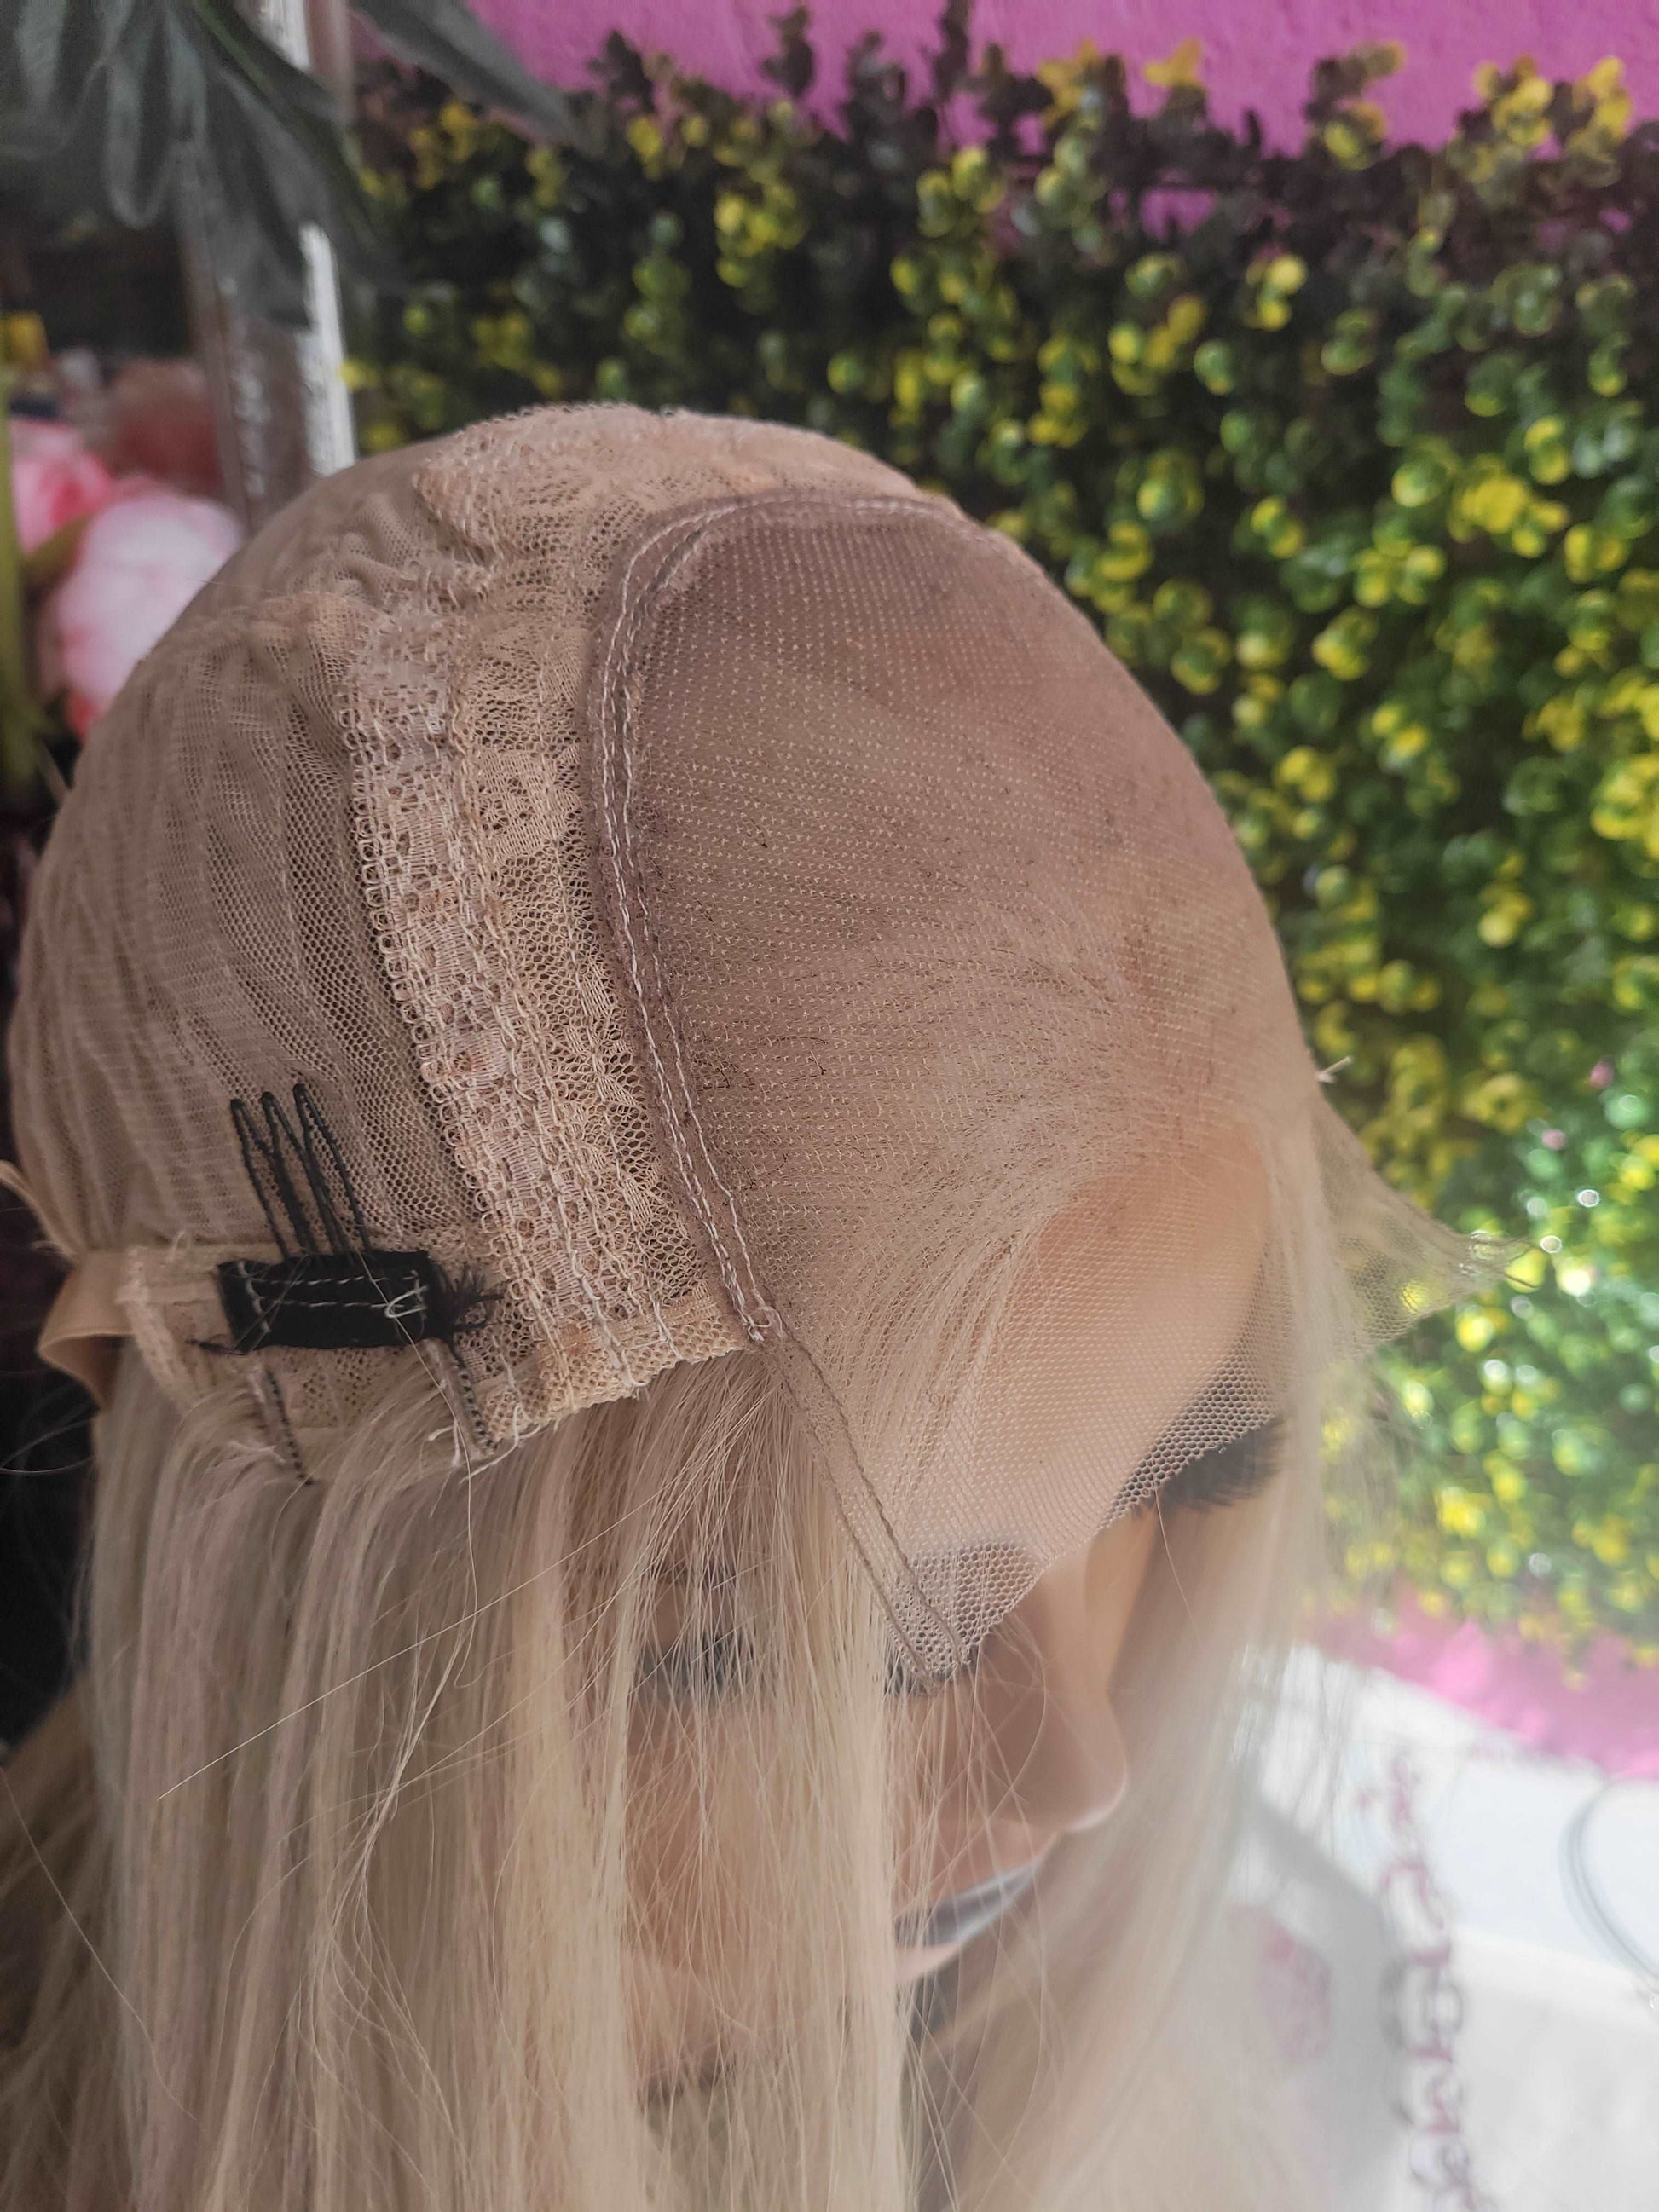 Cool Blond HD closure wig